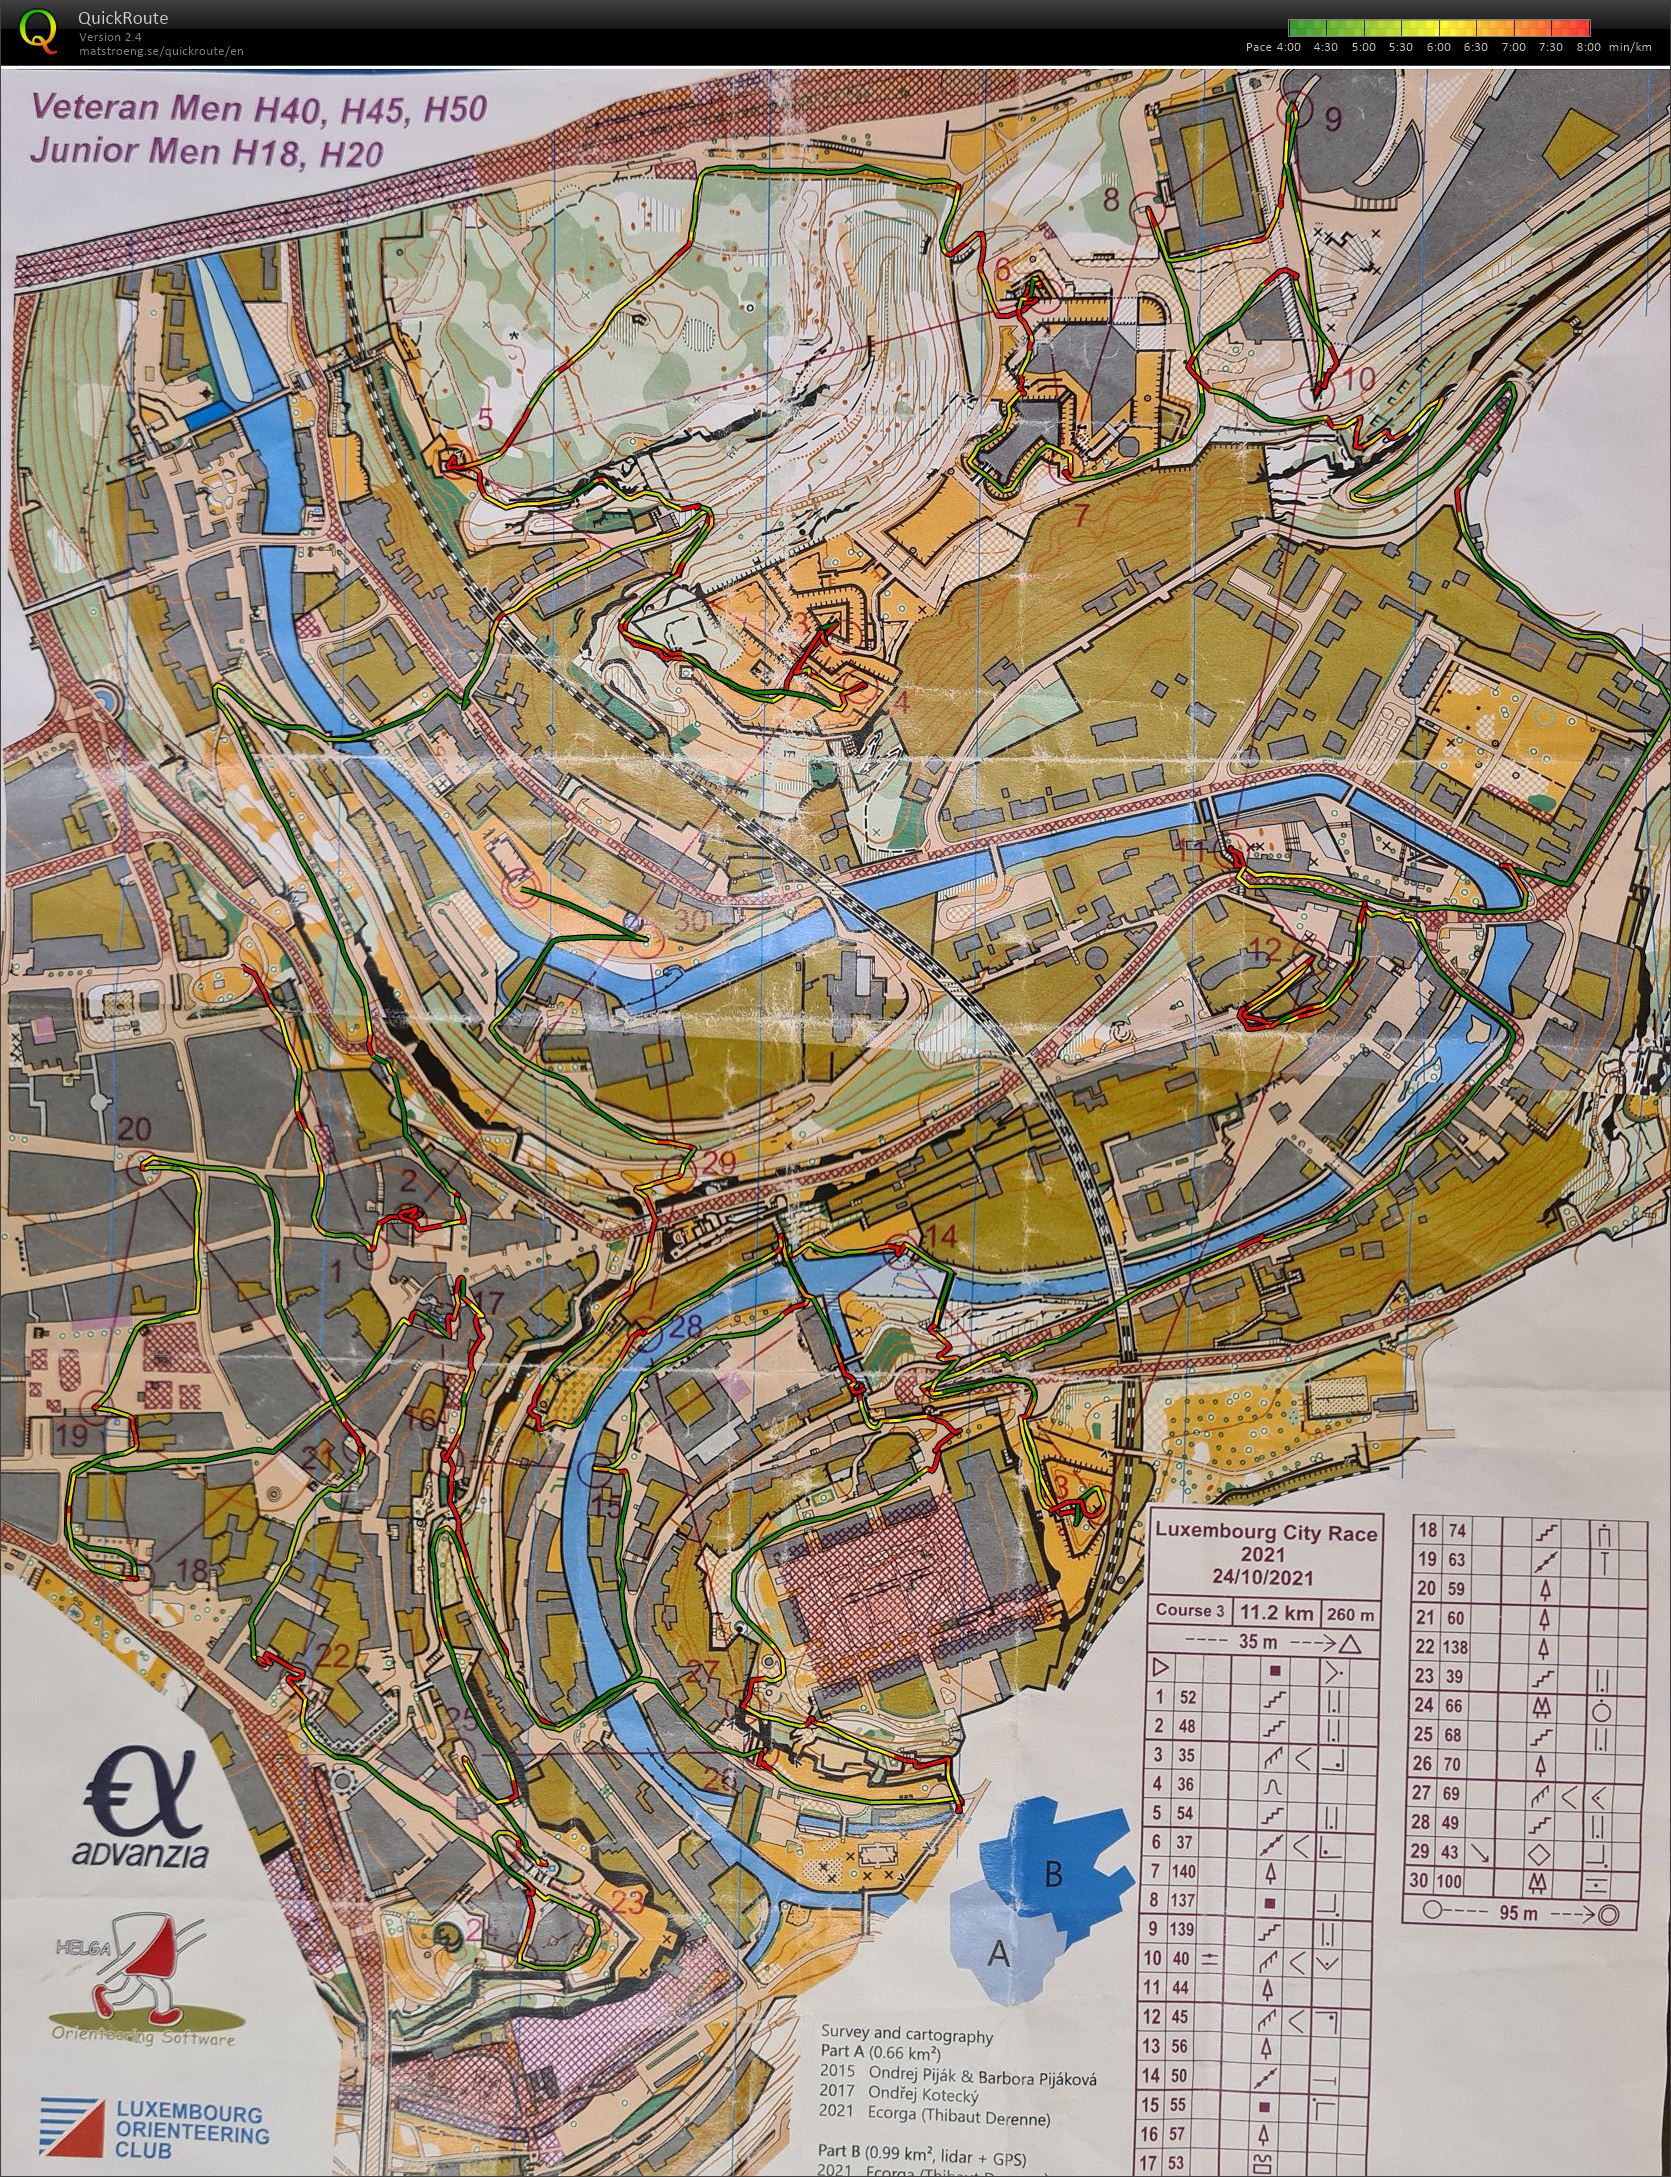 Luxemburg City Race, Long, M50 (24/10/2021)